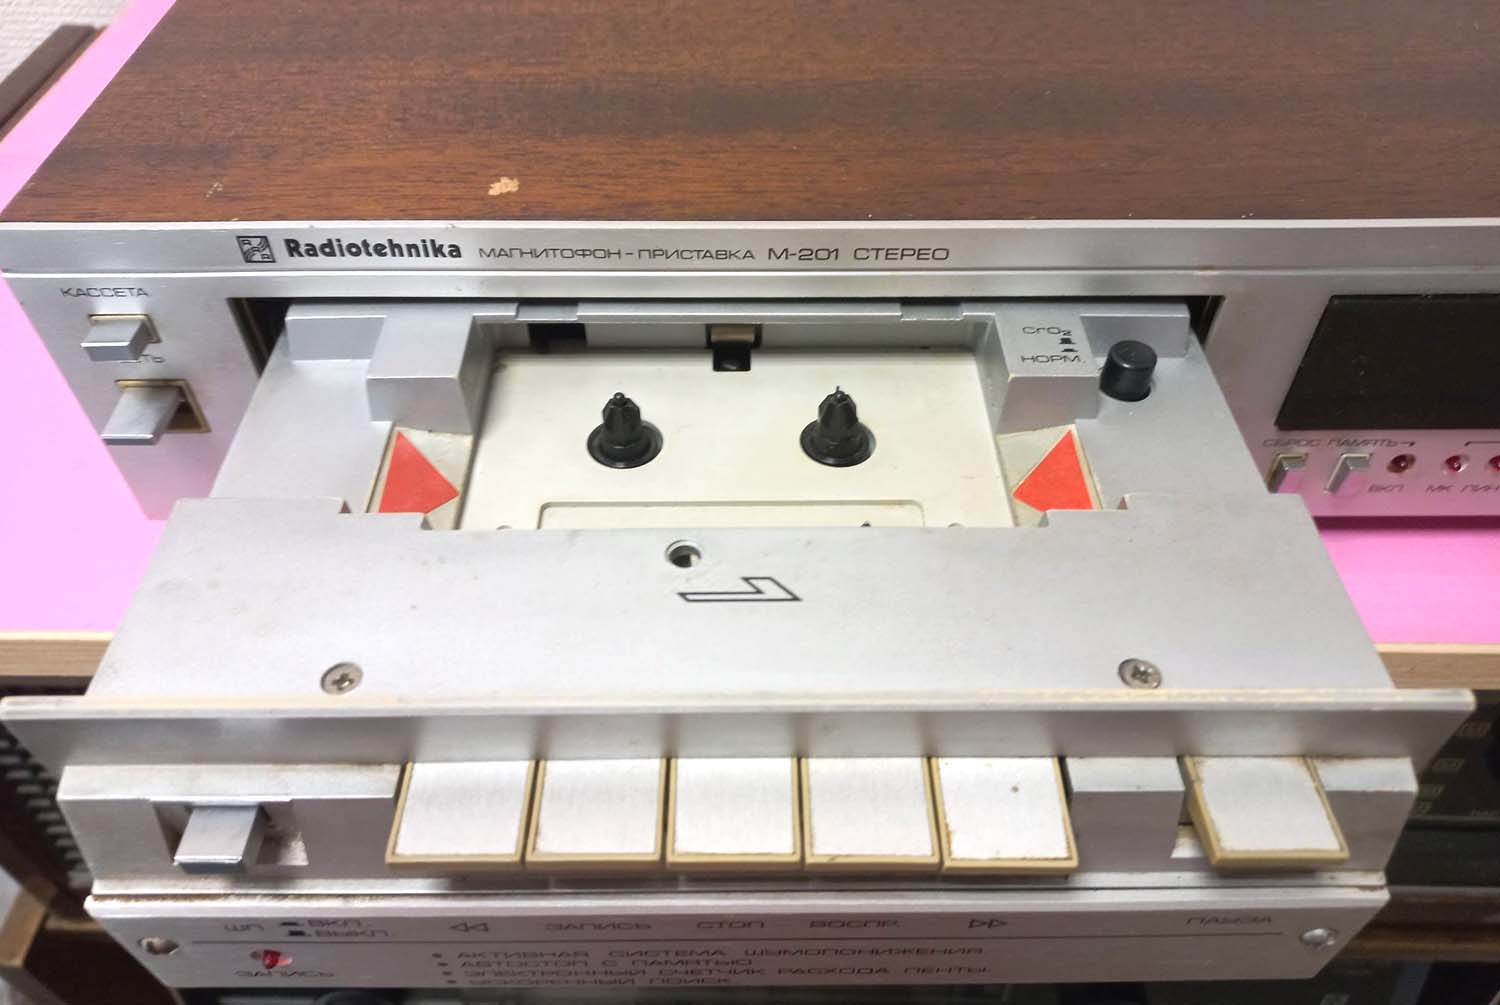 Radiotehnika cassete deck tray type треевый подносовый тип